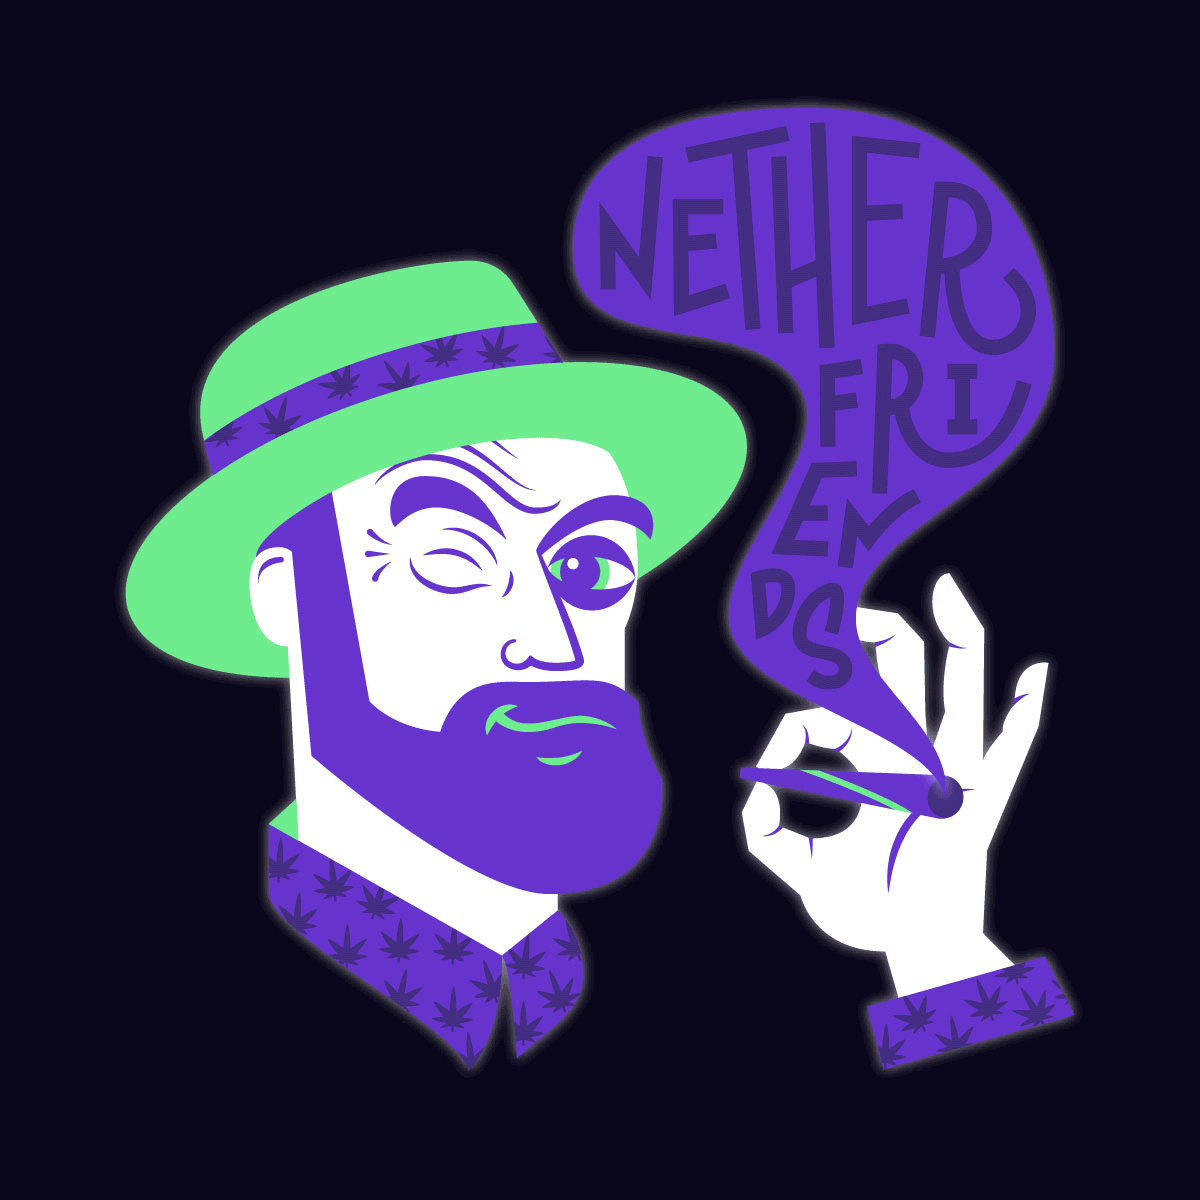 netherfriends-neon-sign